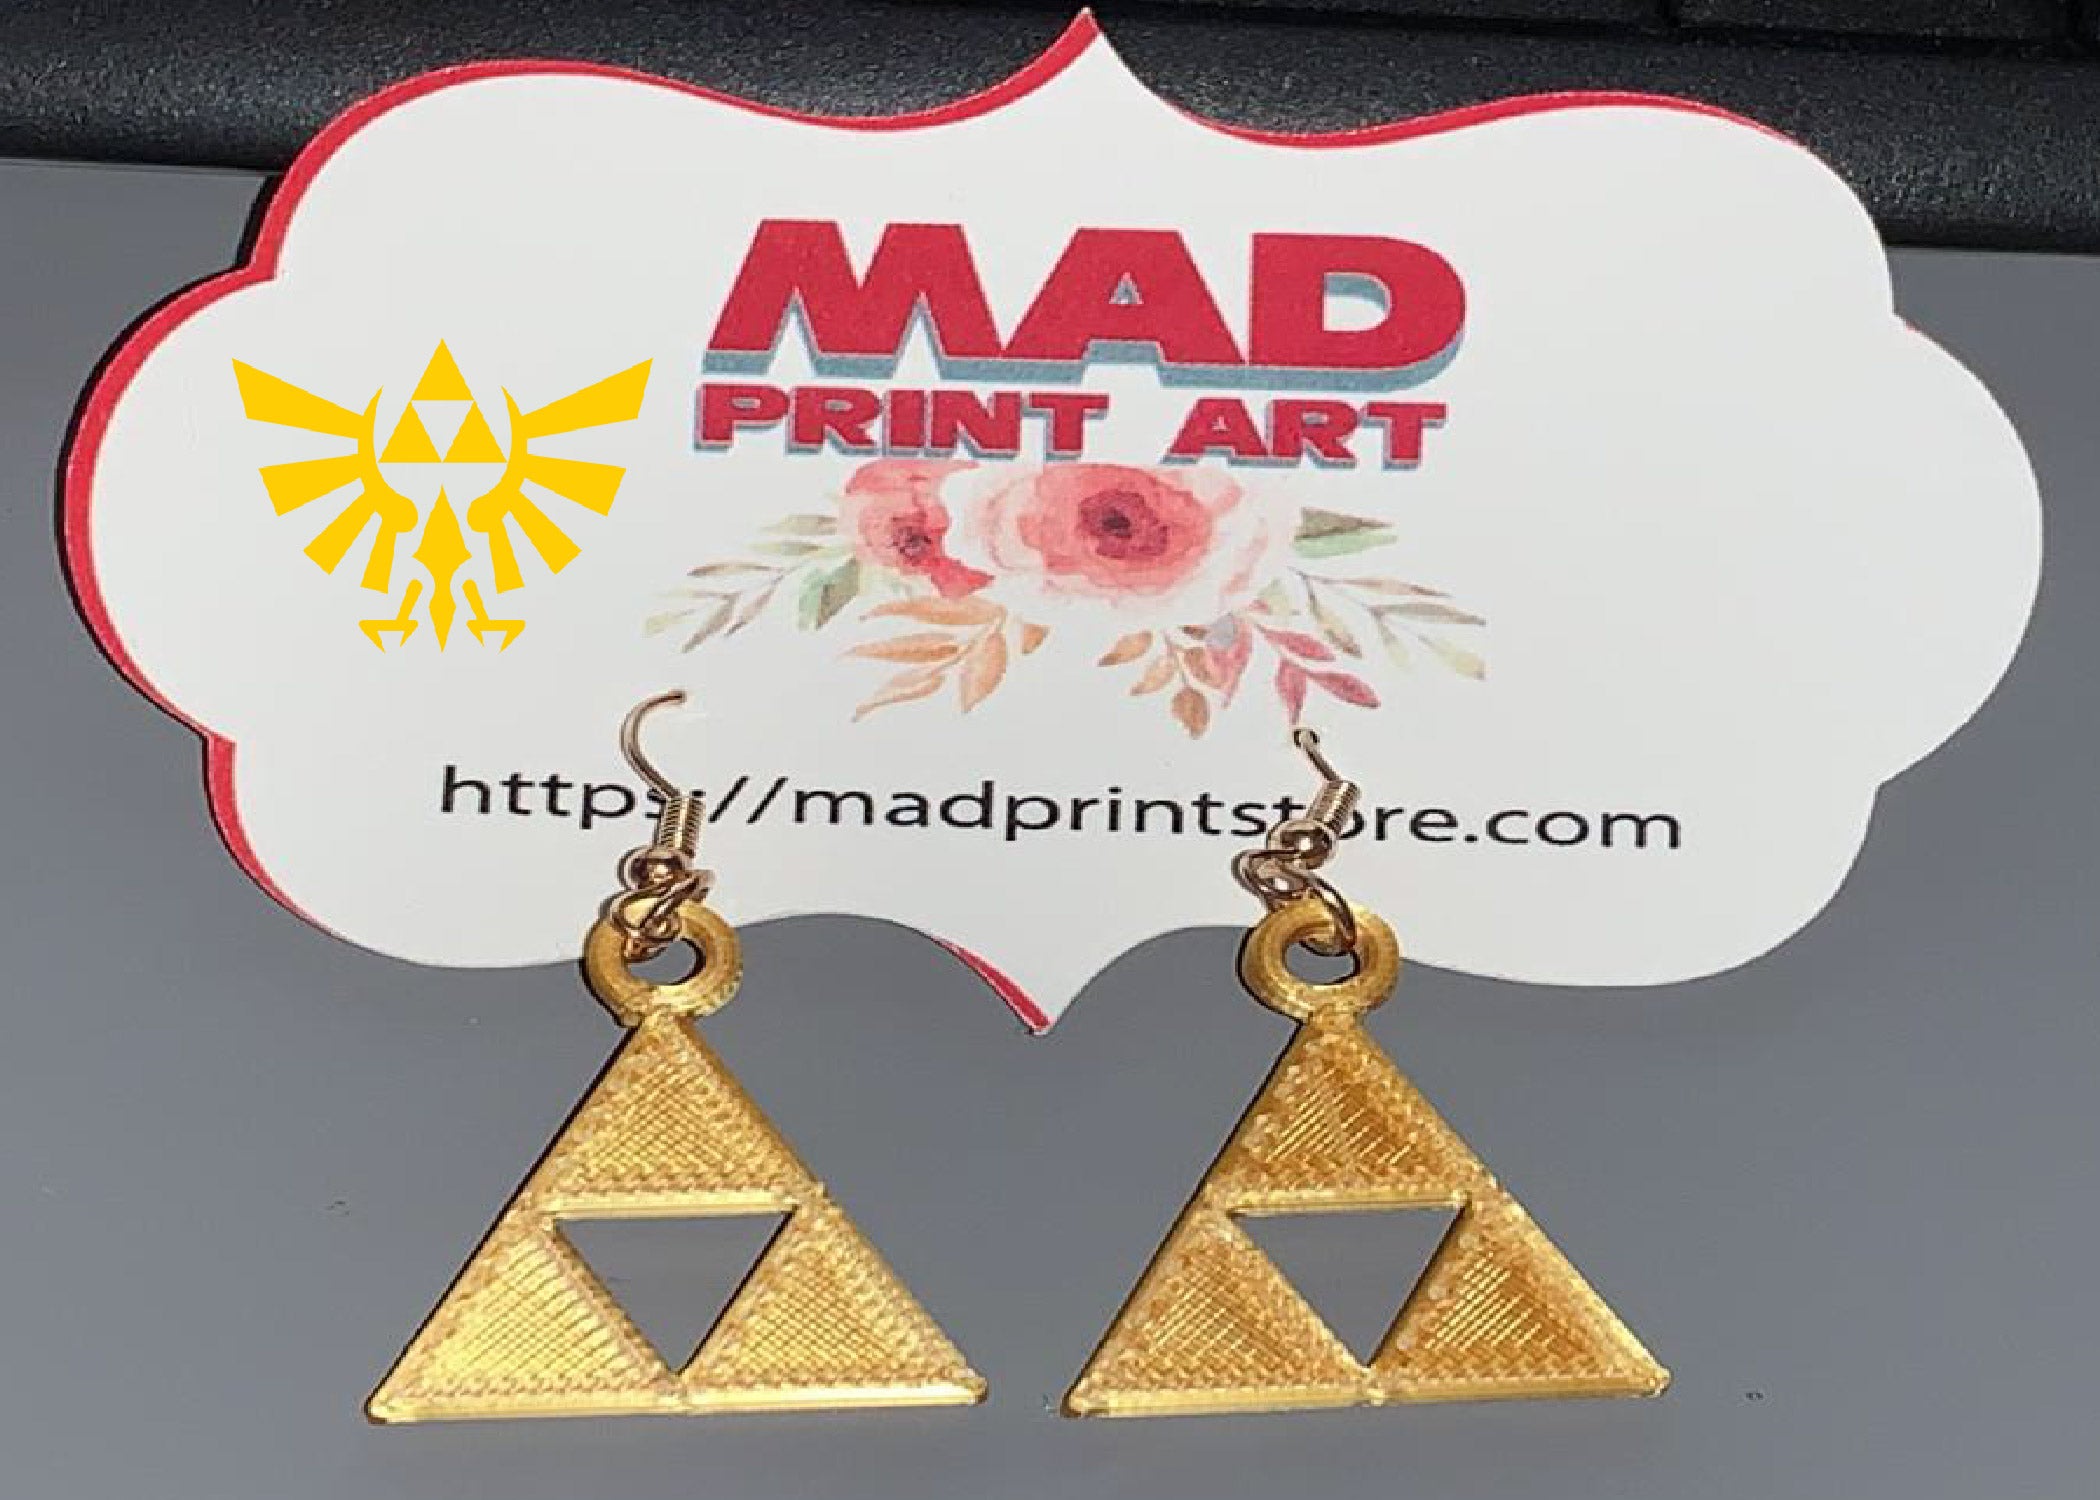 3D Printing Triforce Legend of Zelda Earring/Cosplay Jewelry